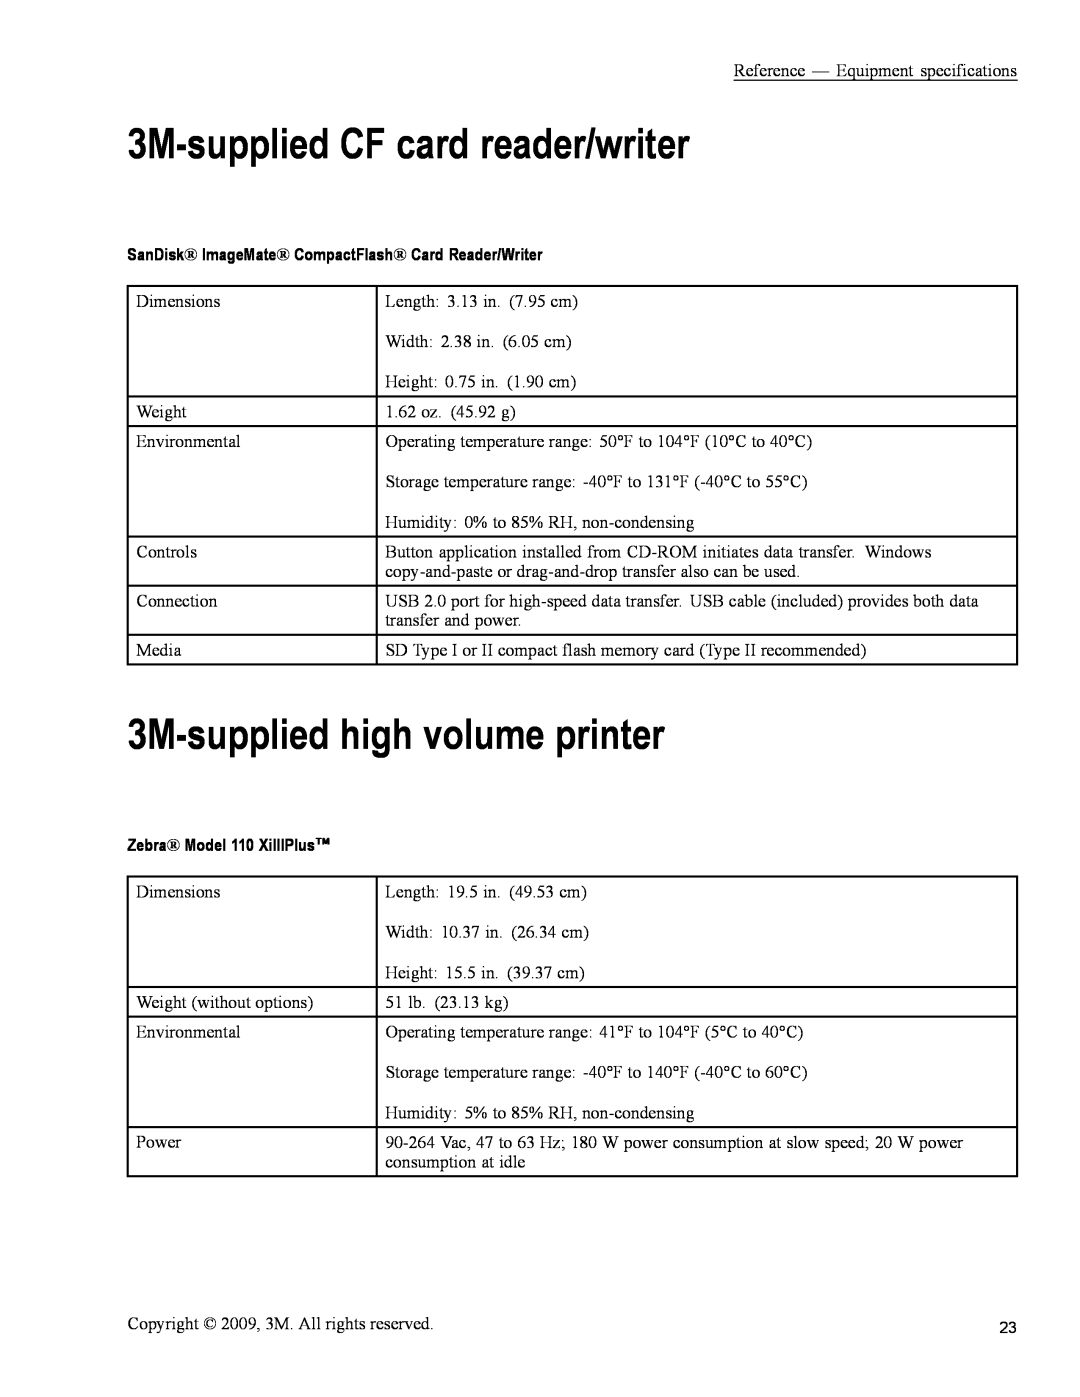 3M 813 owner manual 3M-supplied CF card reader/writer, 3M-supplied high volume printer, Zebra Model 110 XiIIIPlus 